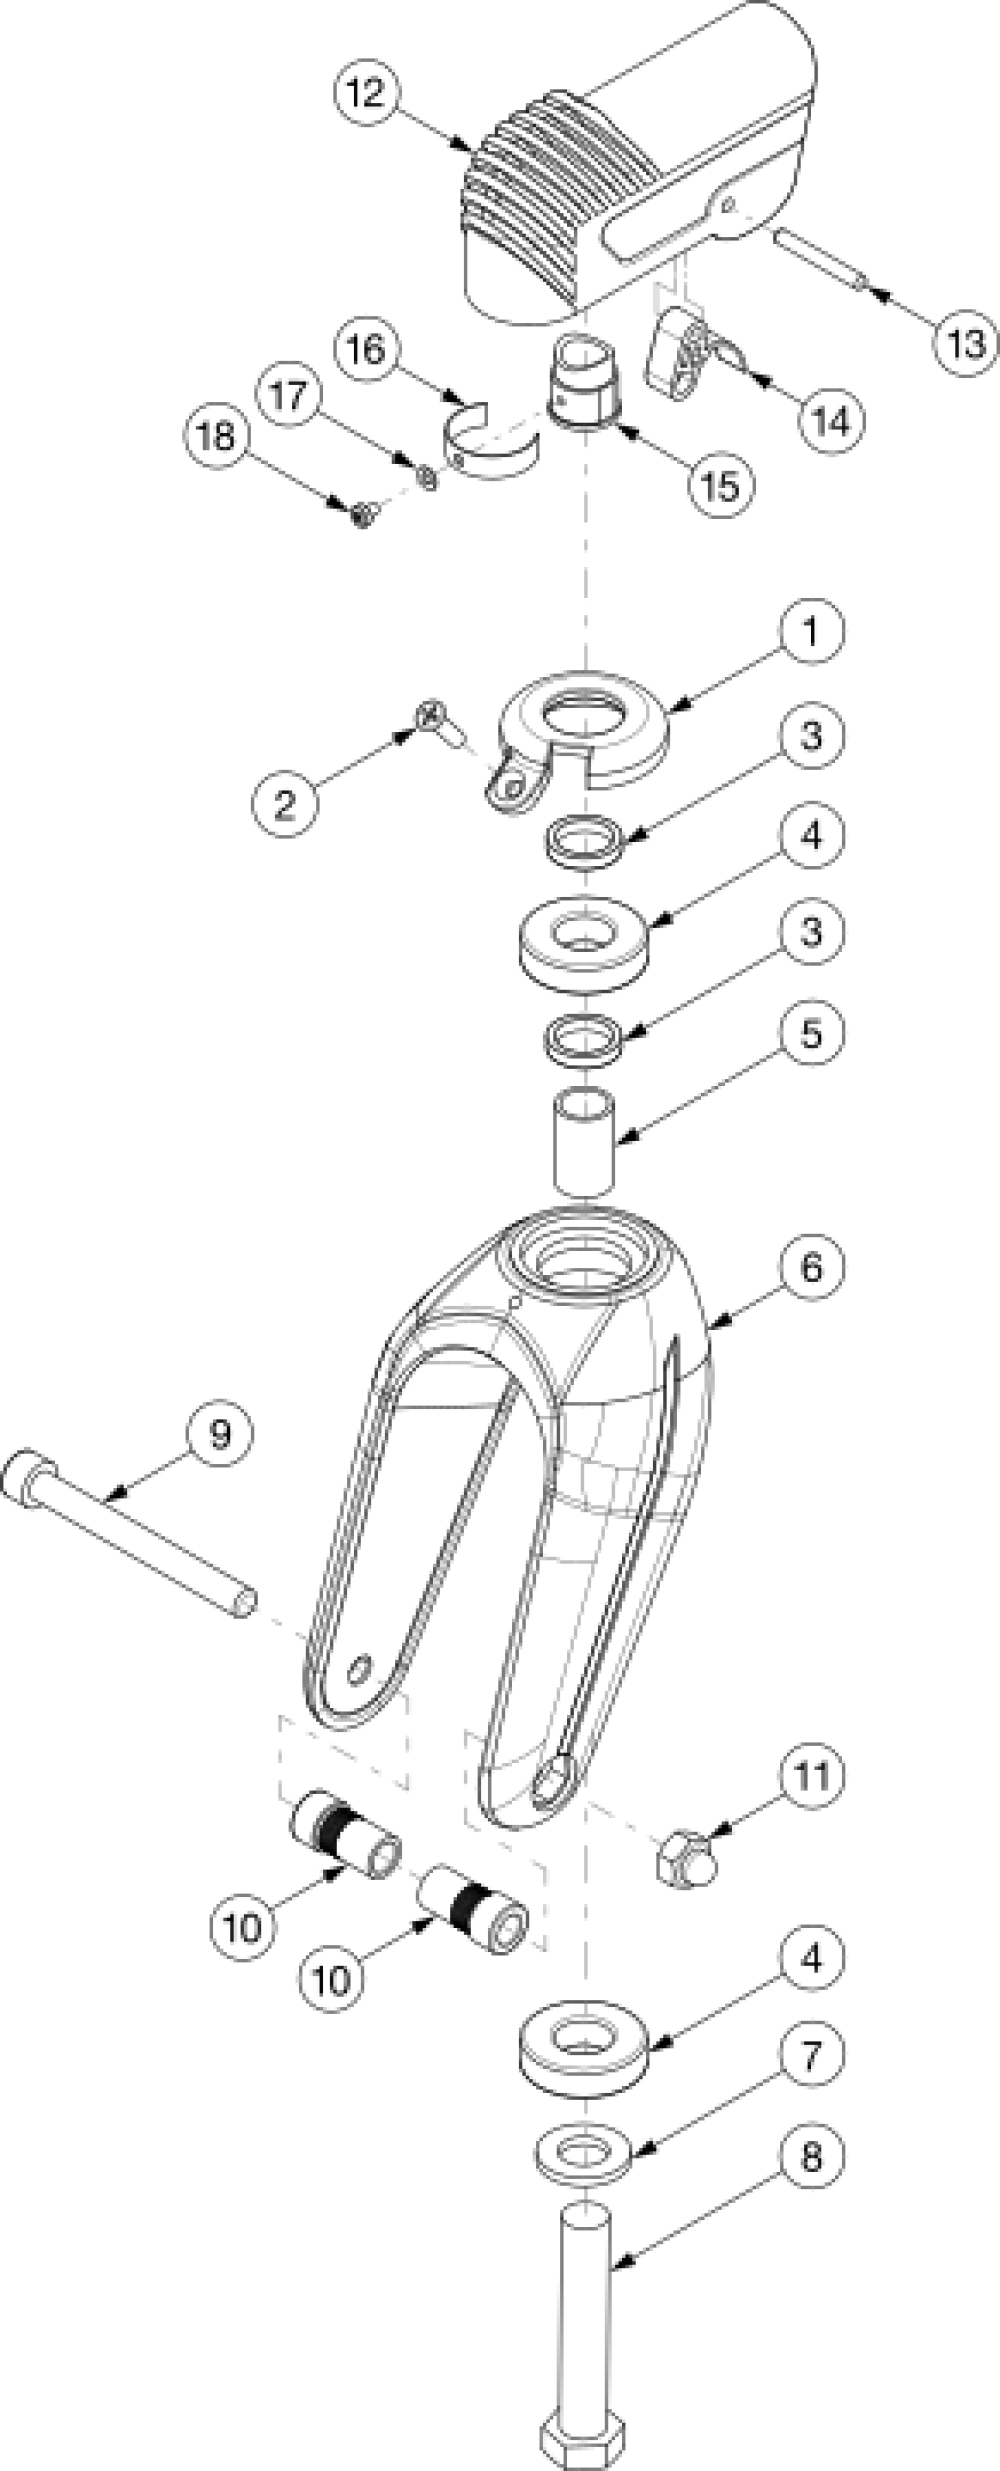 Tyke Caster Fork And Stem parts diagram